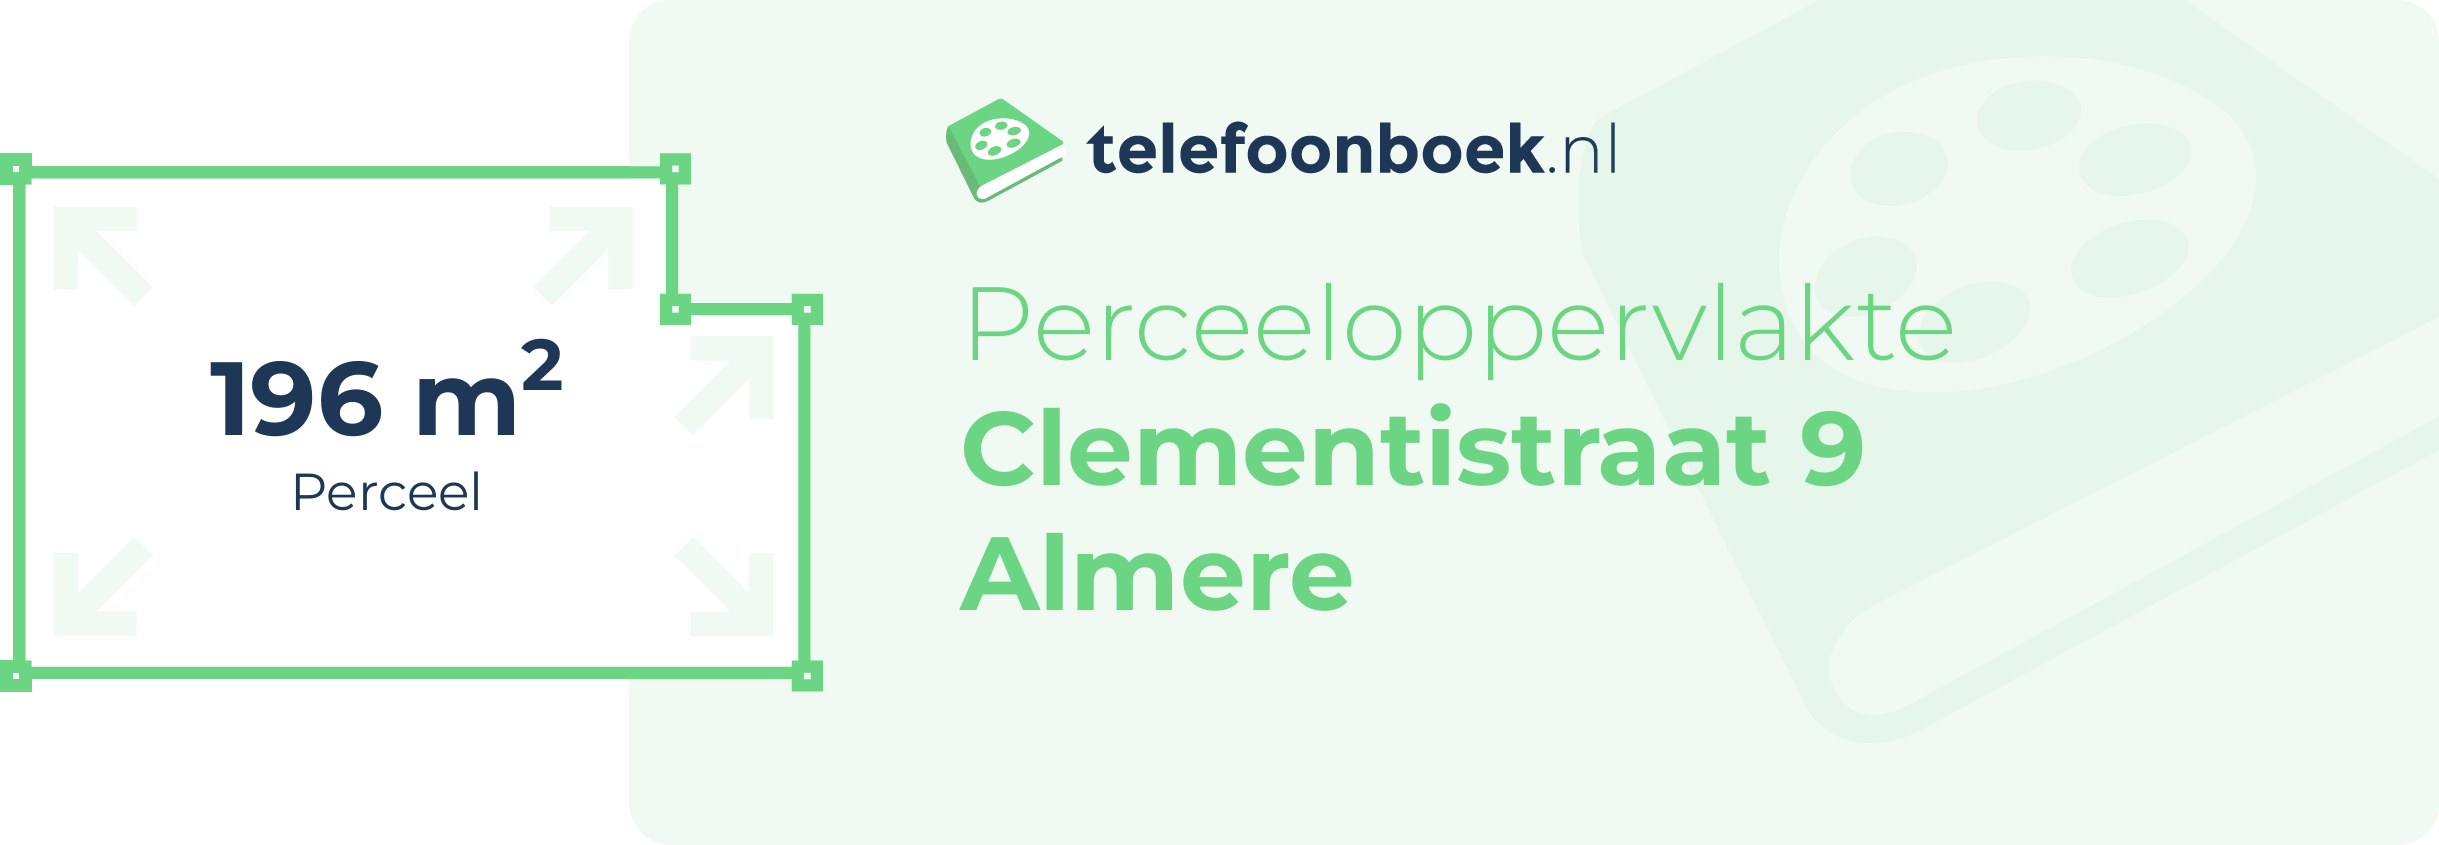 Perceeloppervlakte Clementistraat 9 Almere